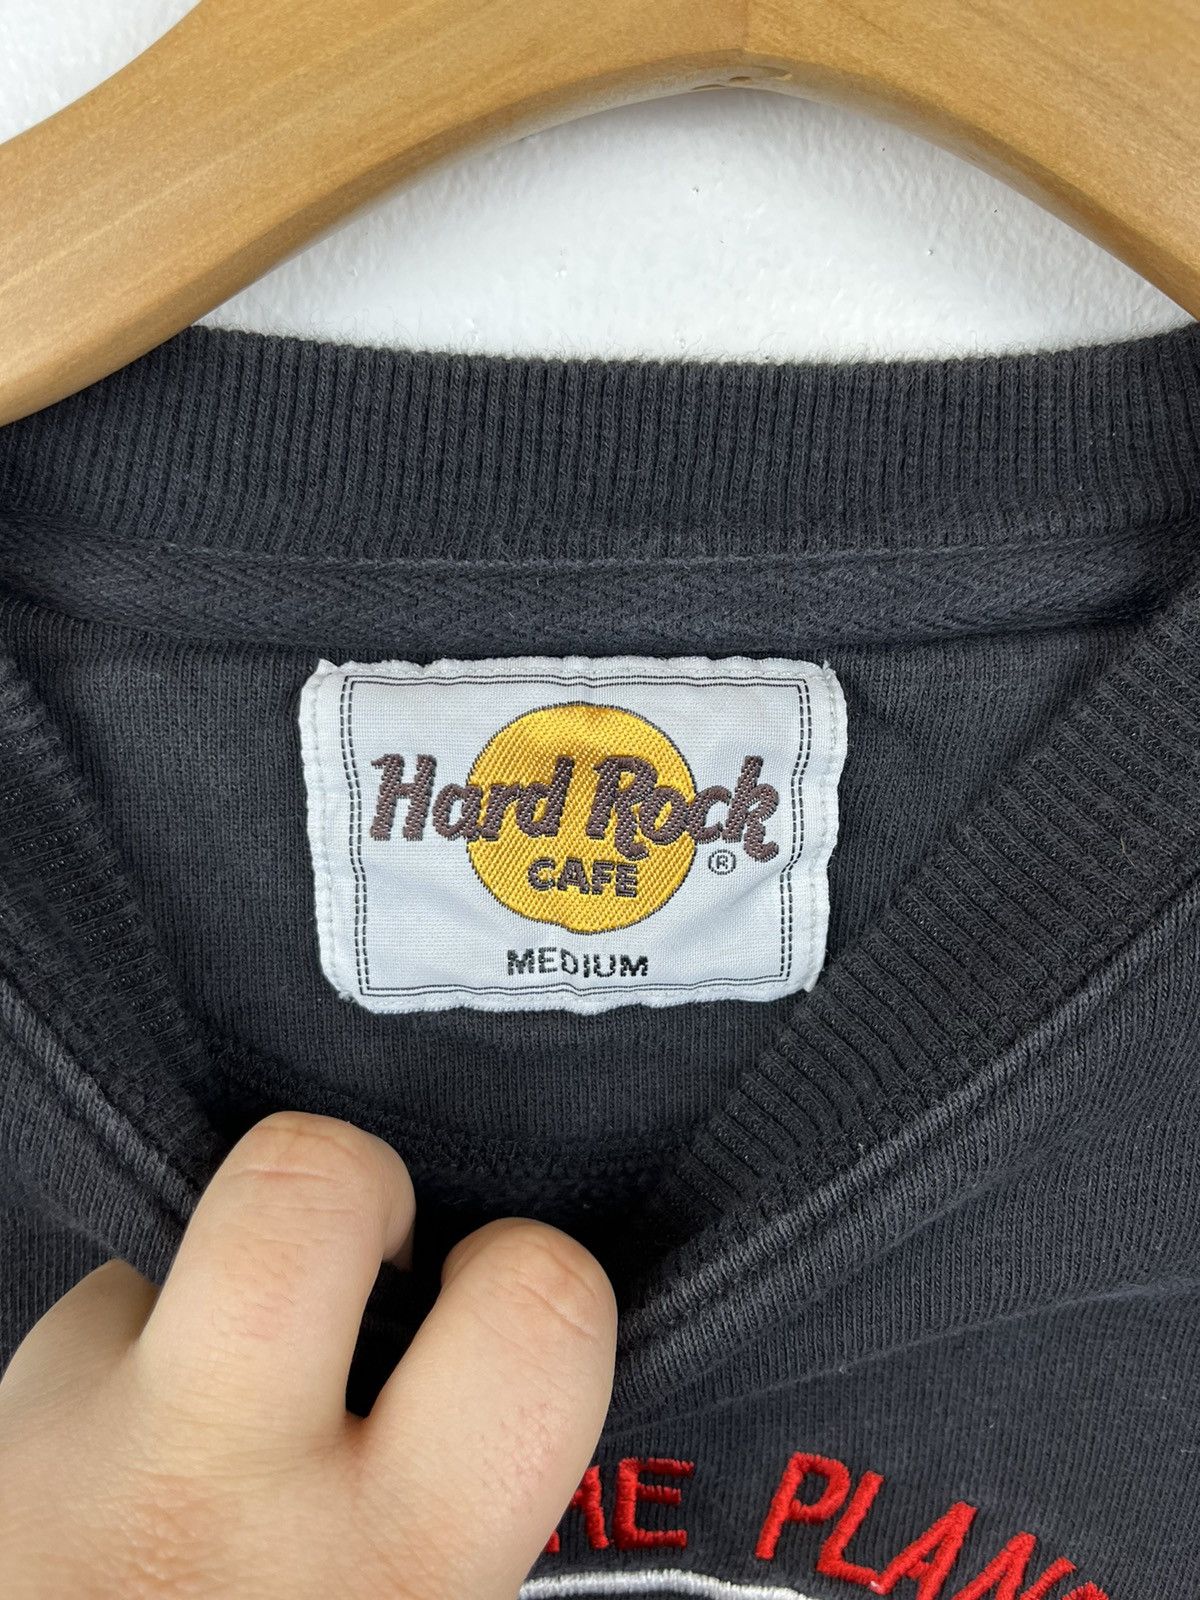 Vintage Vintage Save The World Hard Rock Cafe Sweater Size US L / EU 52-54 / 3 - 3 Preview